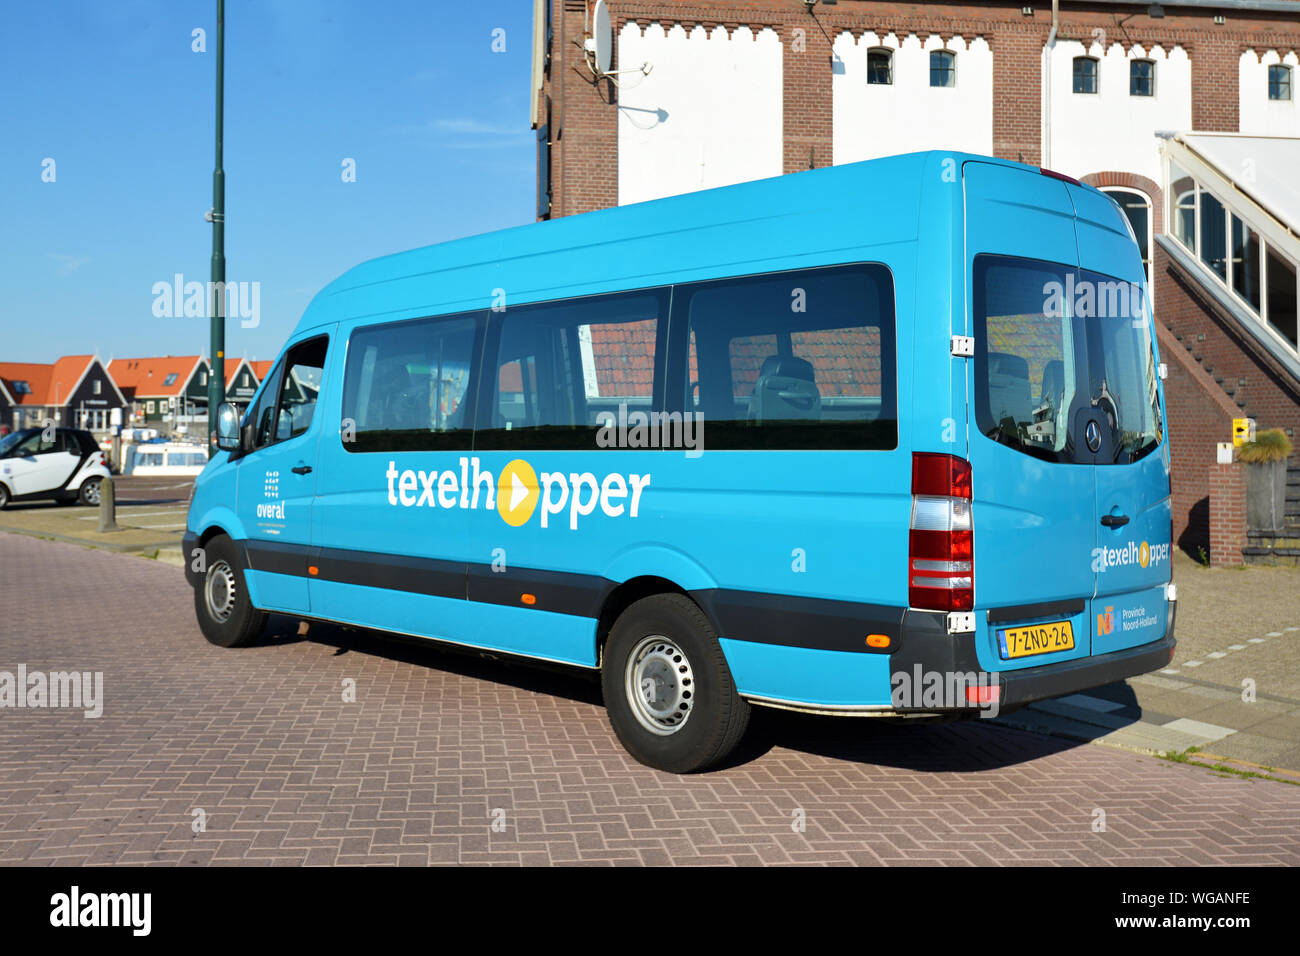 Oudeschild, Texel / nel nord dei Paesi Bassi - Agosto 2019: Piccoli autobus blu van chiamato 'Texelhopper' Foto Stock